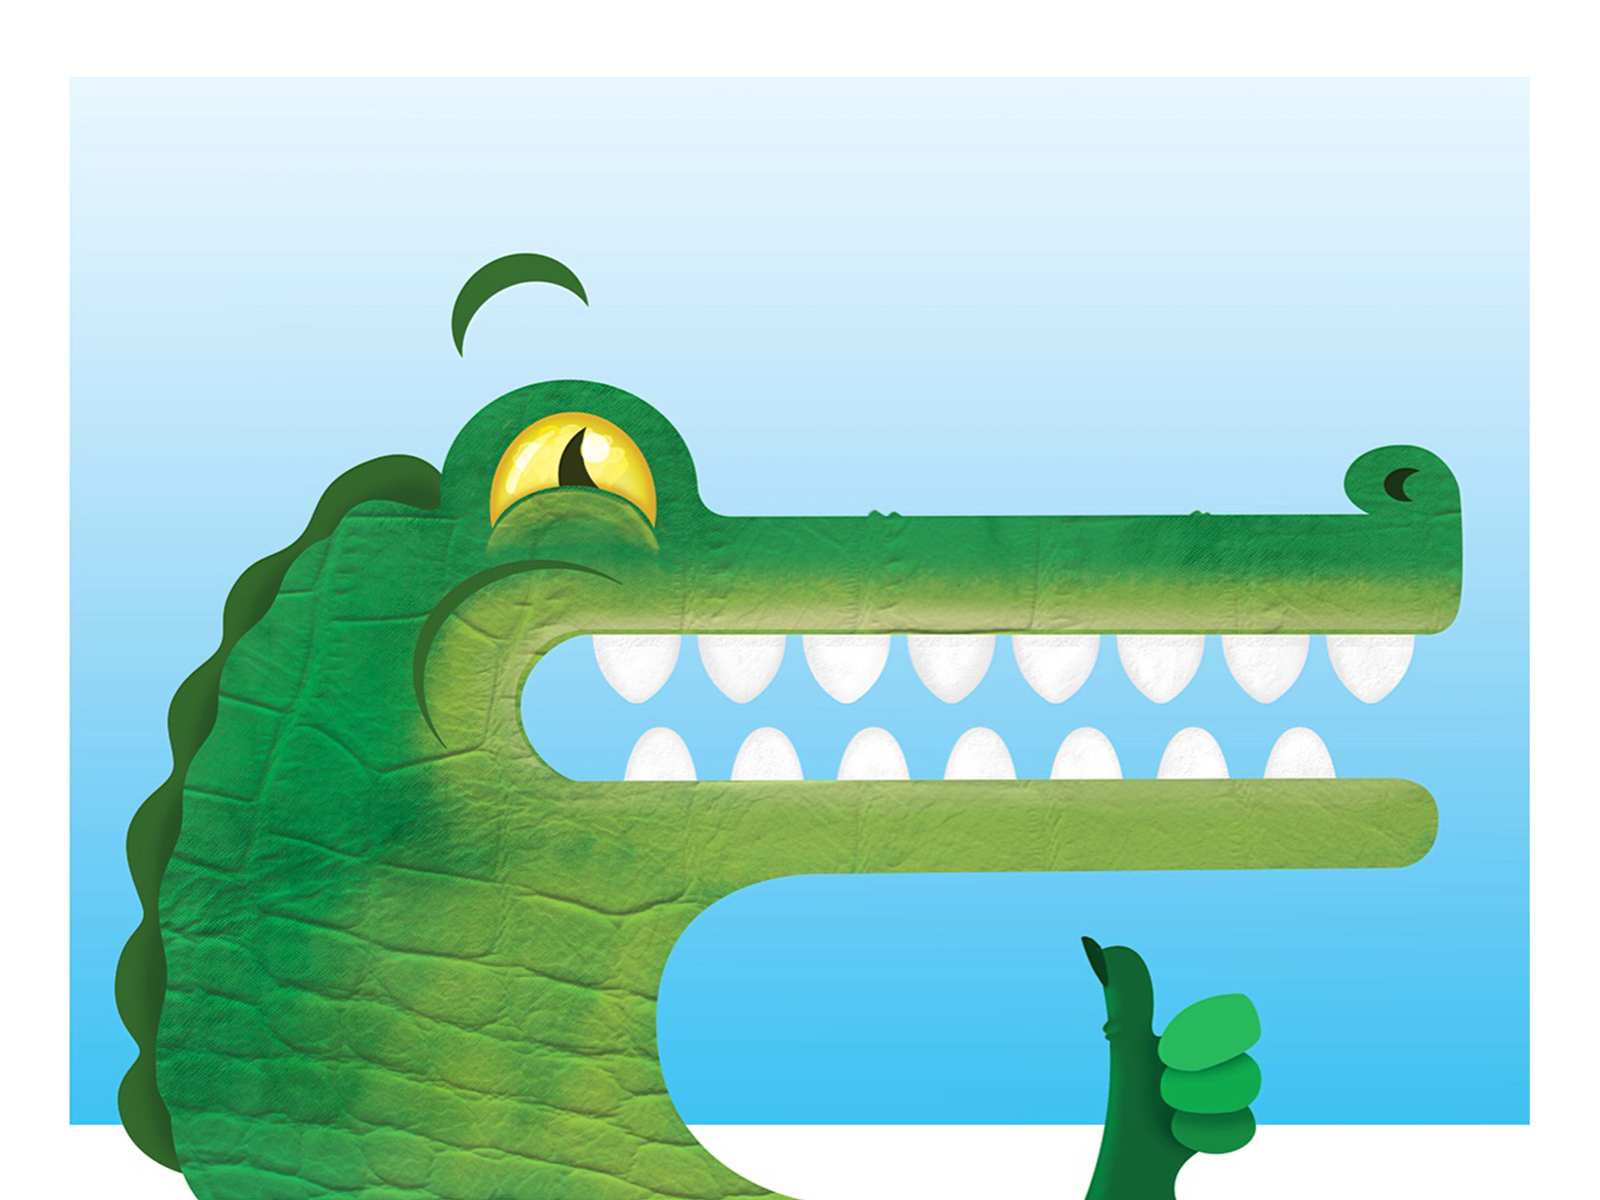 Crocodile Smile by Nicholas Borgert on Dribbble